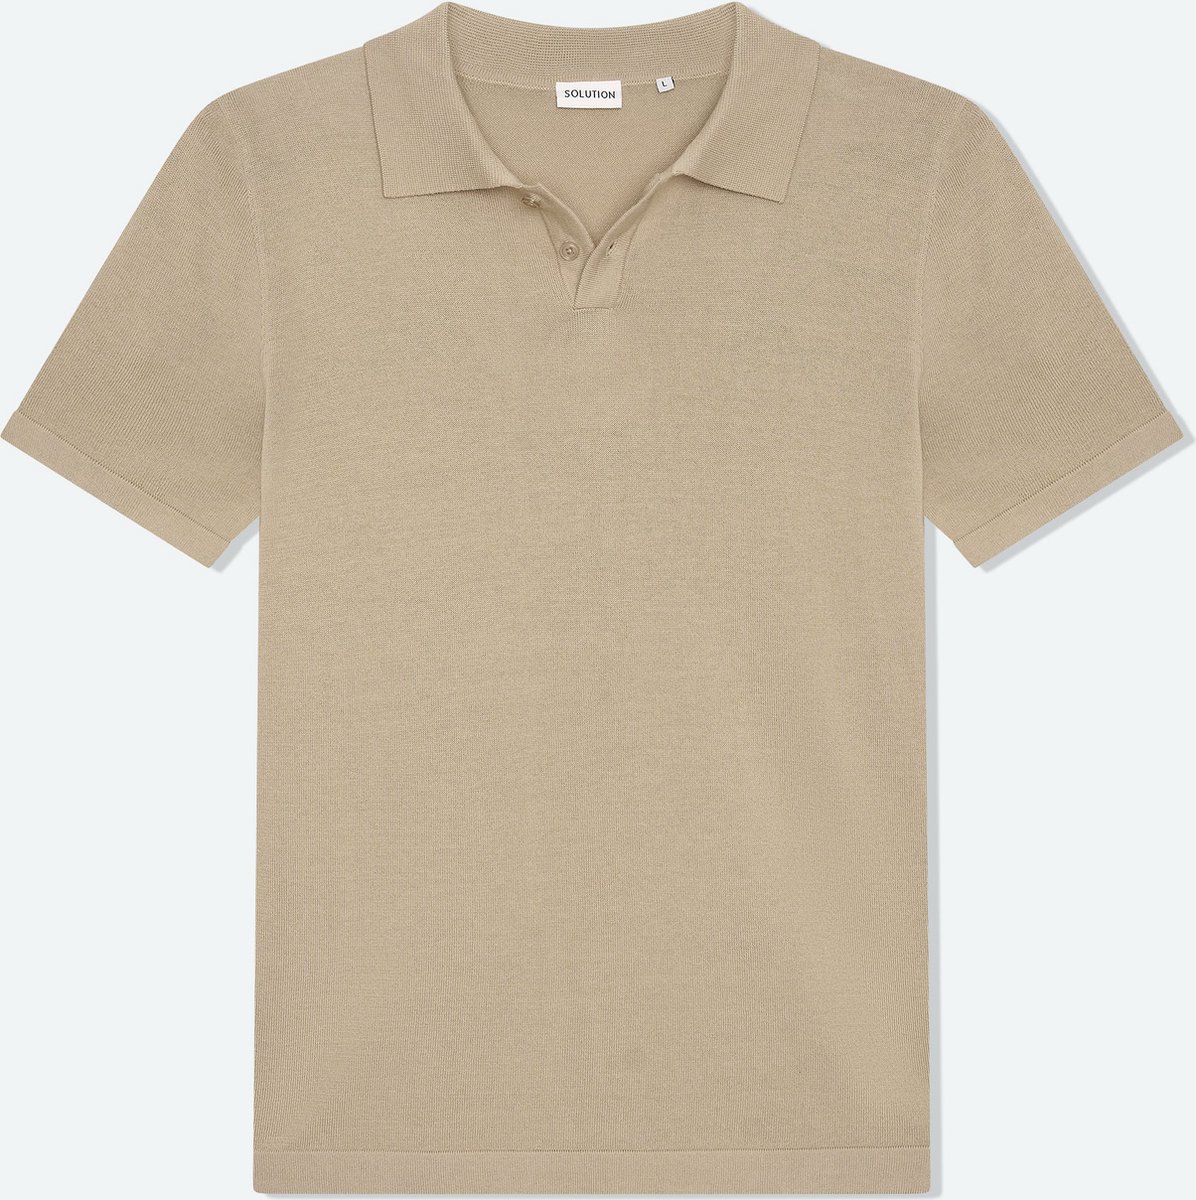 Solution Clothing Purdy - Casual Poloshirt - Regular Fit - Knoopsluiting - Volwassenen - Heren - Mannen - Taupe - Beige - XL - XL - Solution Clothing